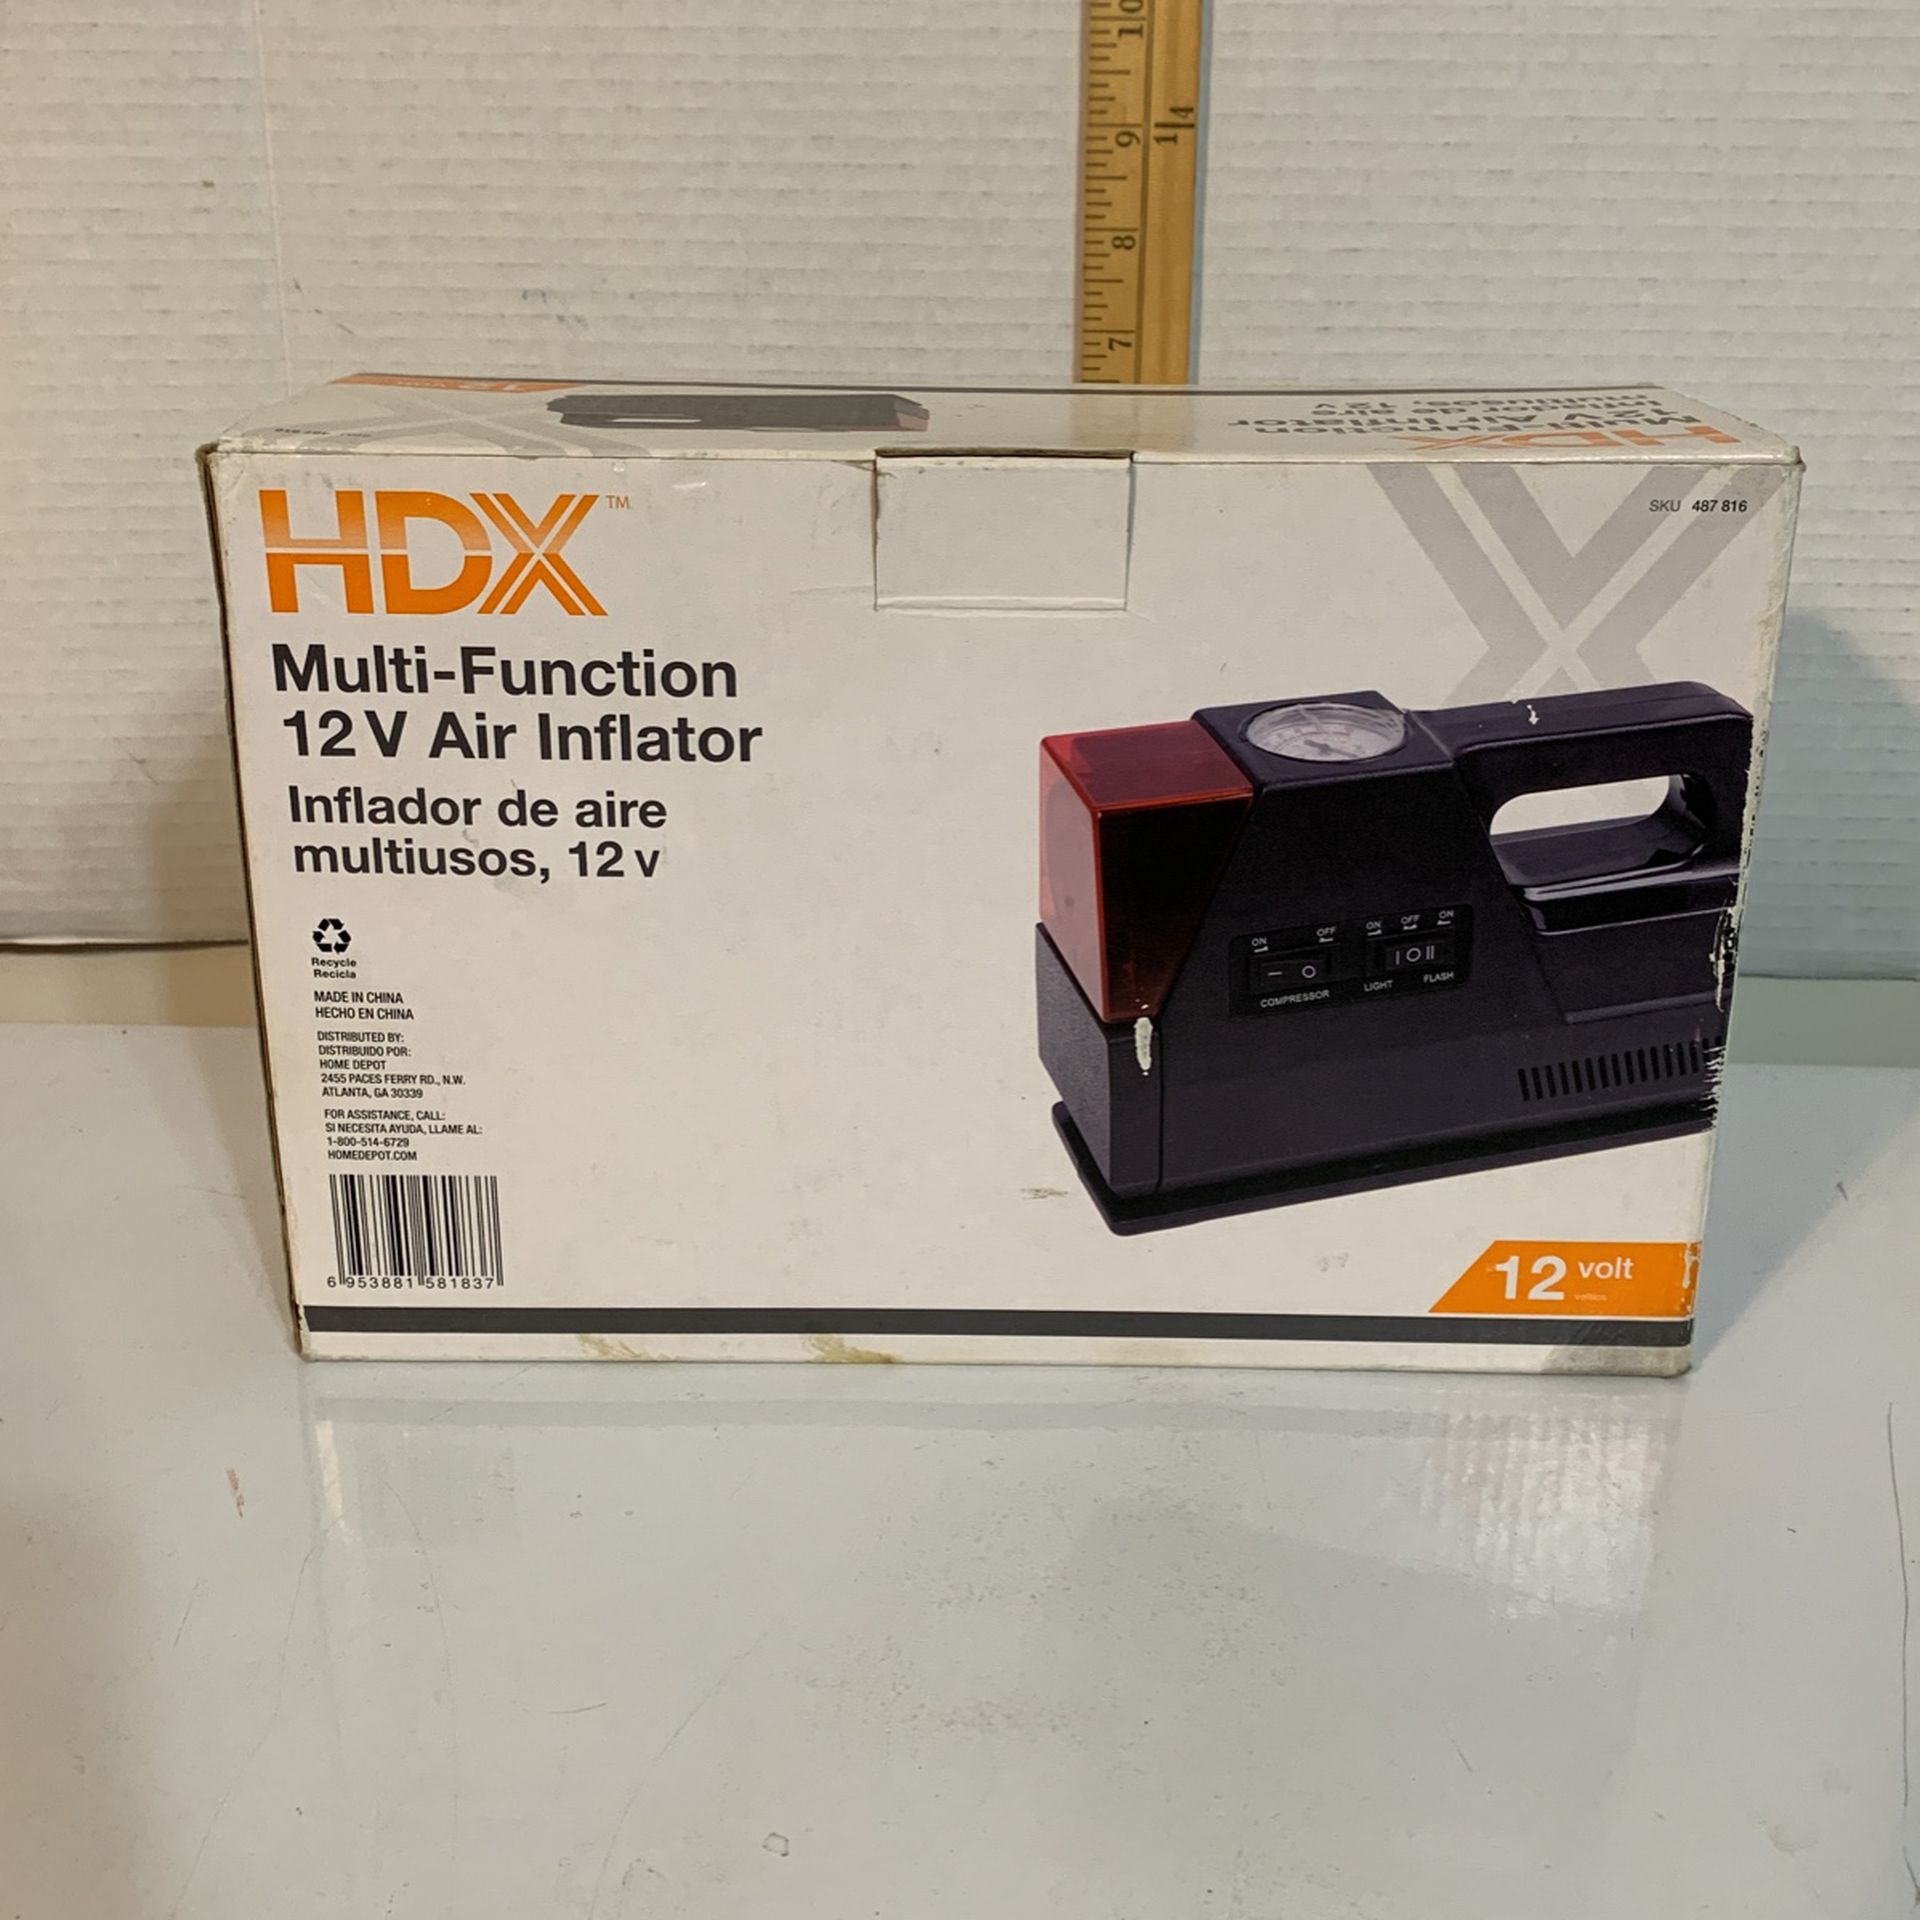 HDX 12 V AIR INFLATOR